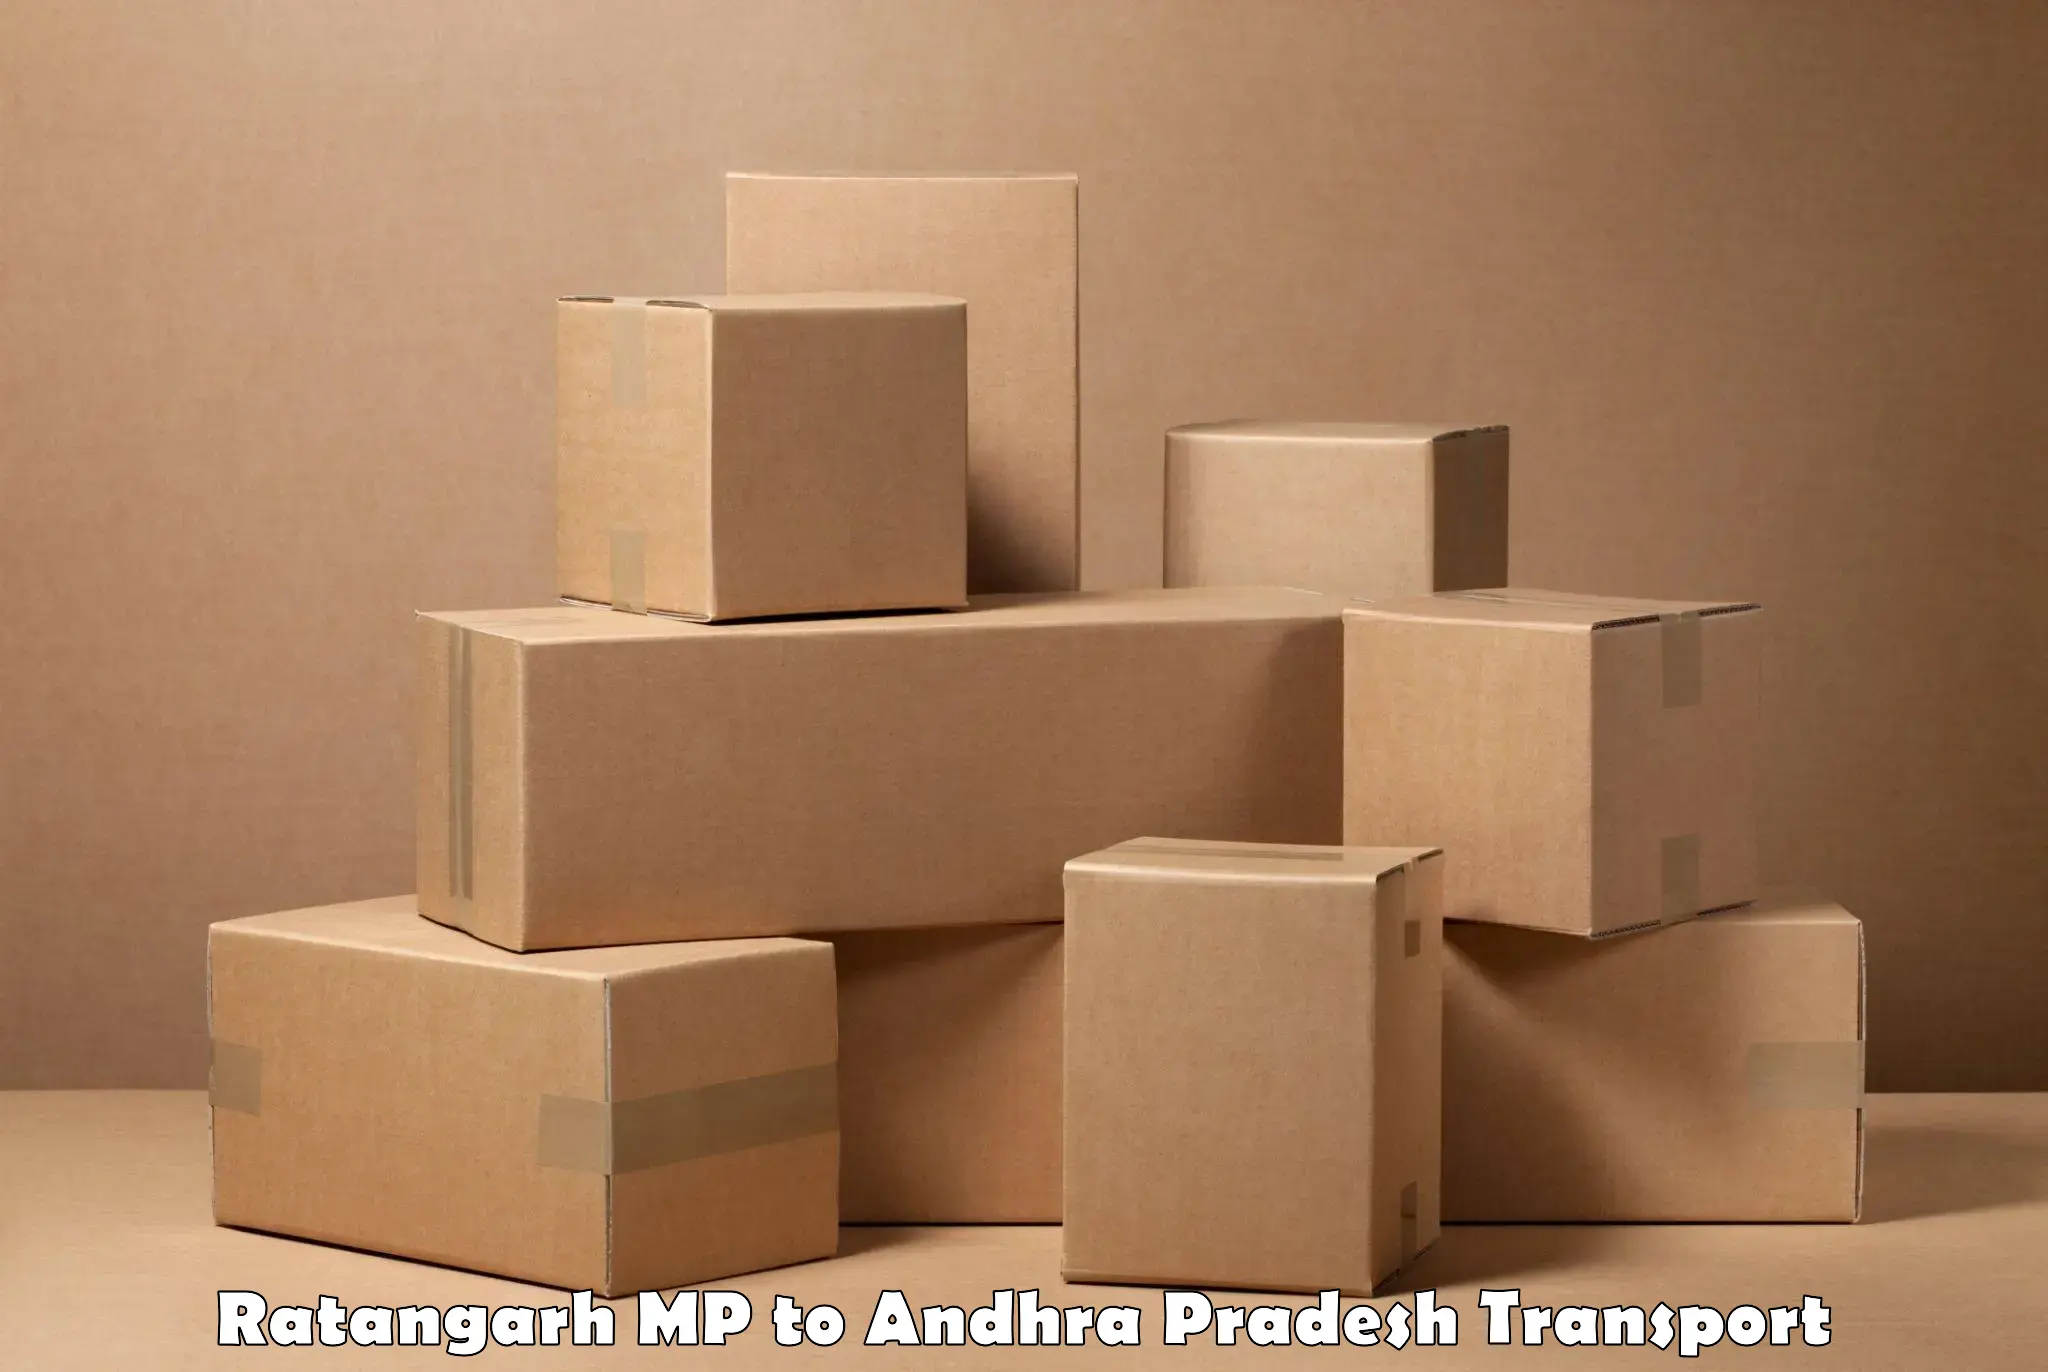 Cargo transport services Ratangarh MP to Tadipatri